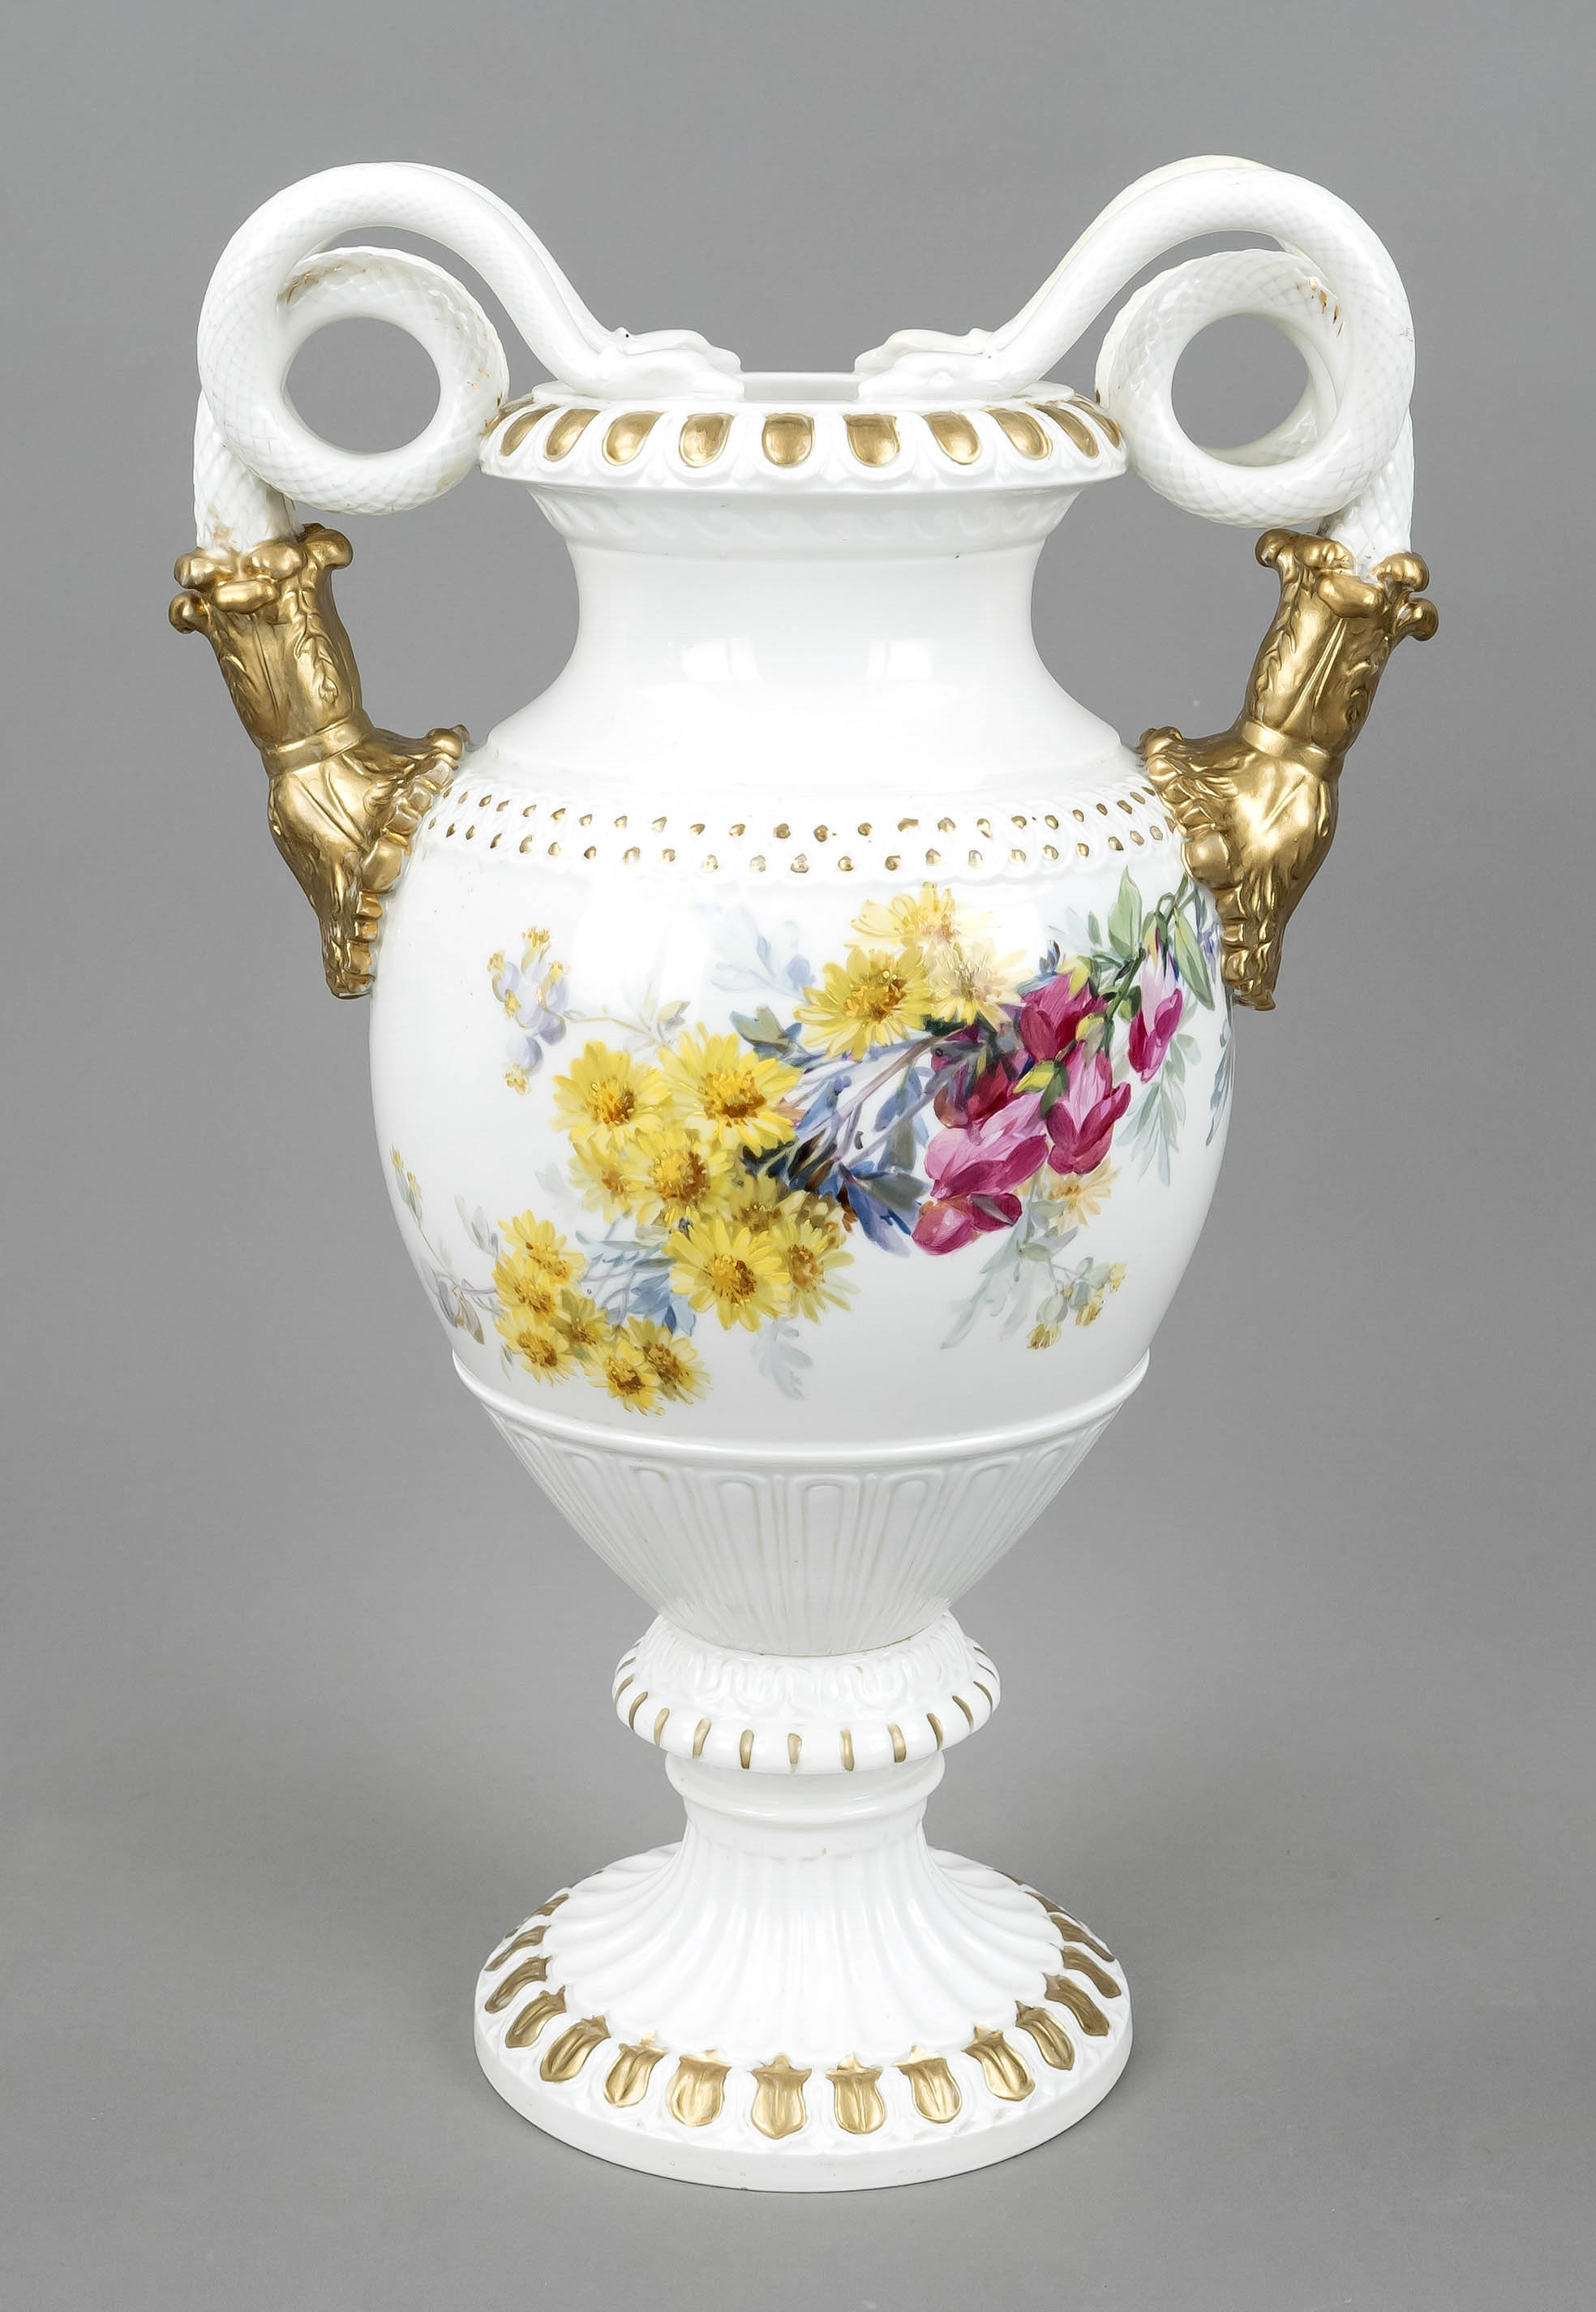 Large snake-handled vase, Meissen, Knaufschwerter 1850-1924, 2nd choice, amphora form with side